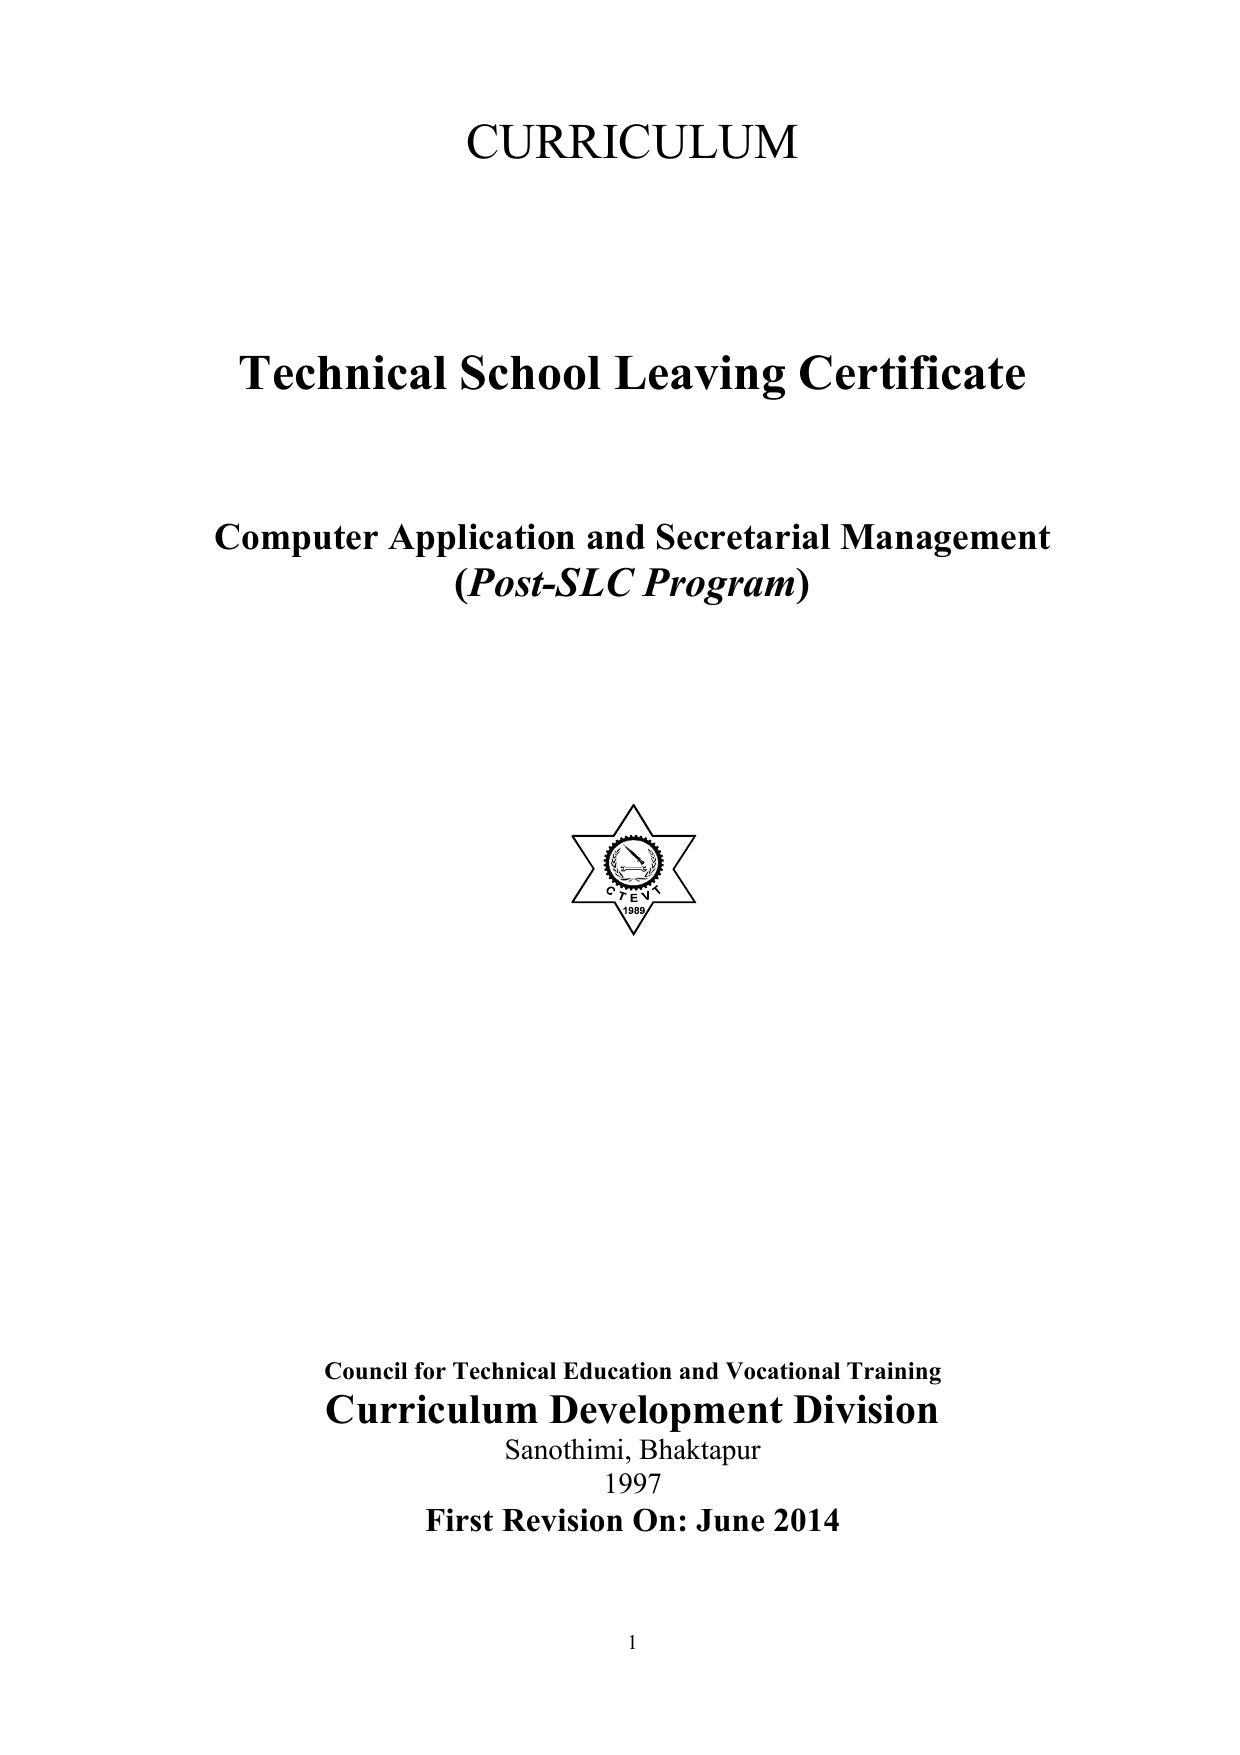 Computer Application and Secretarial Management, Post SLC 2014